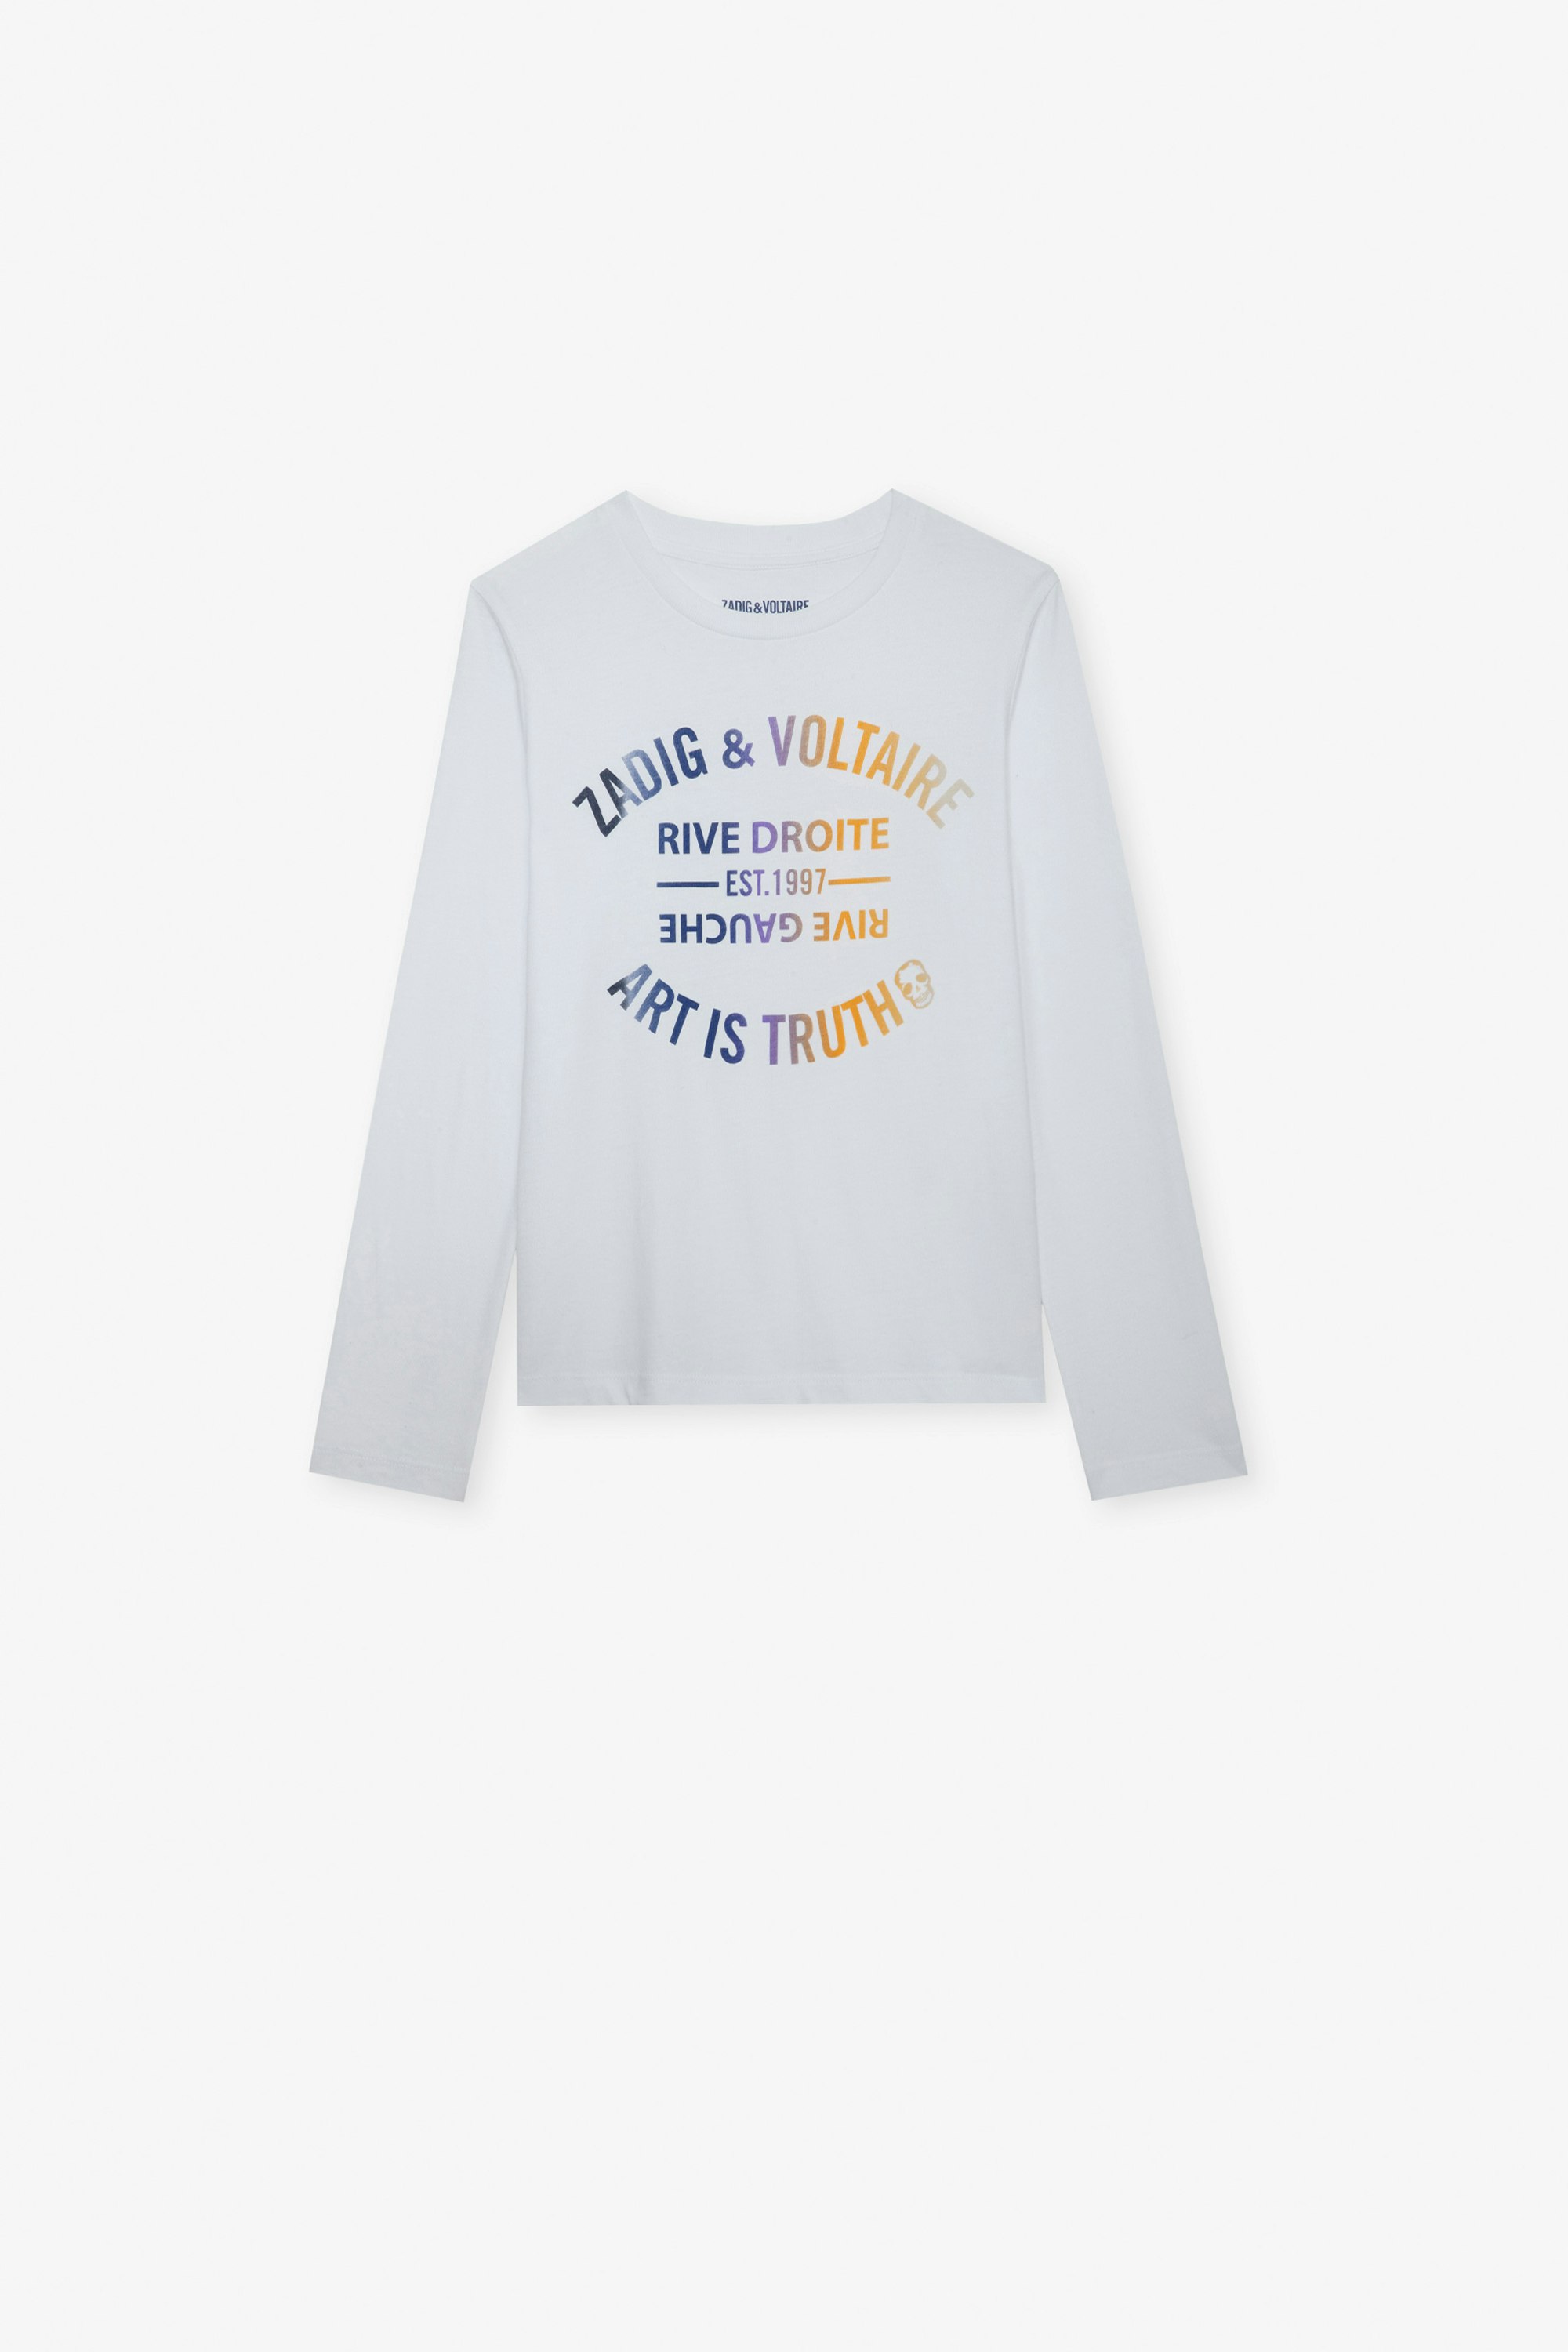 Kita Boys’ T-Shirt - Boys’ white long-sleeved cotton T-shirt with insignia.